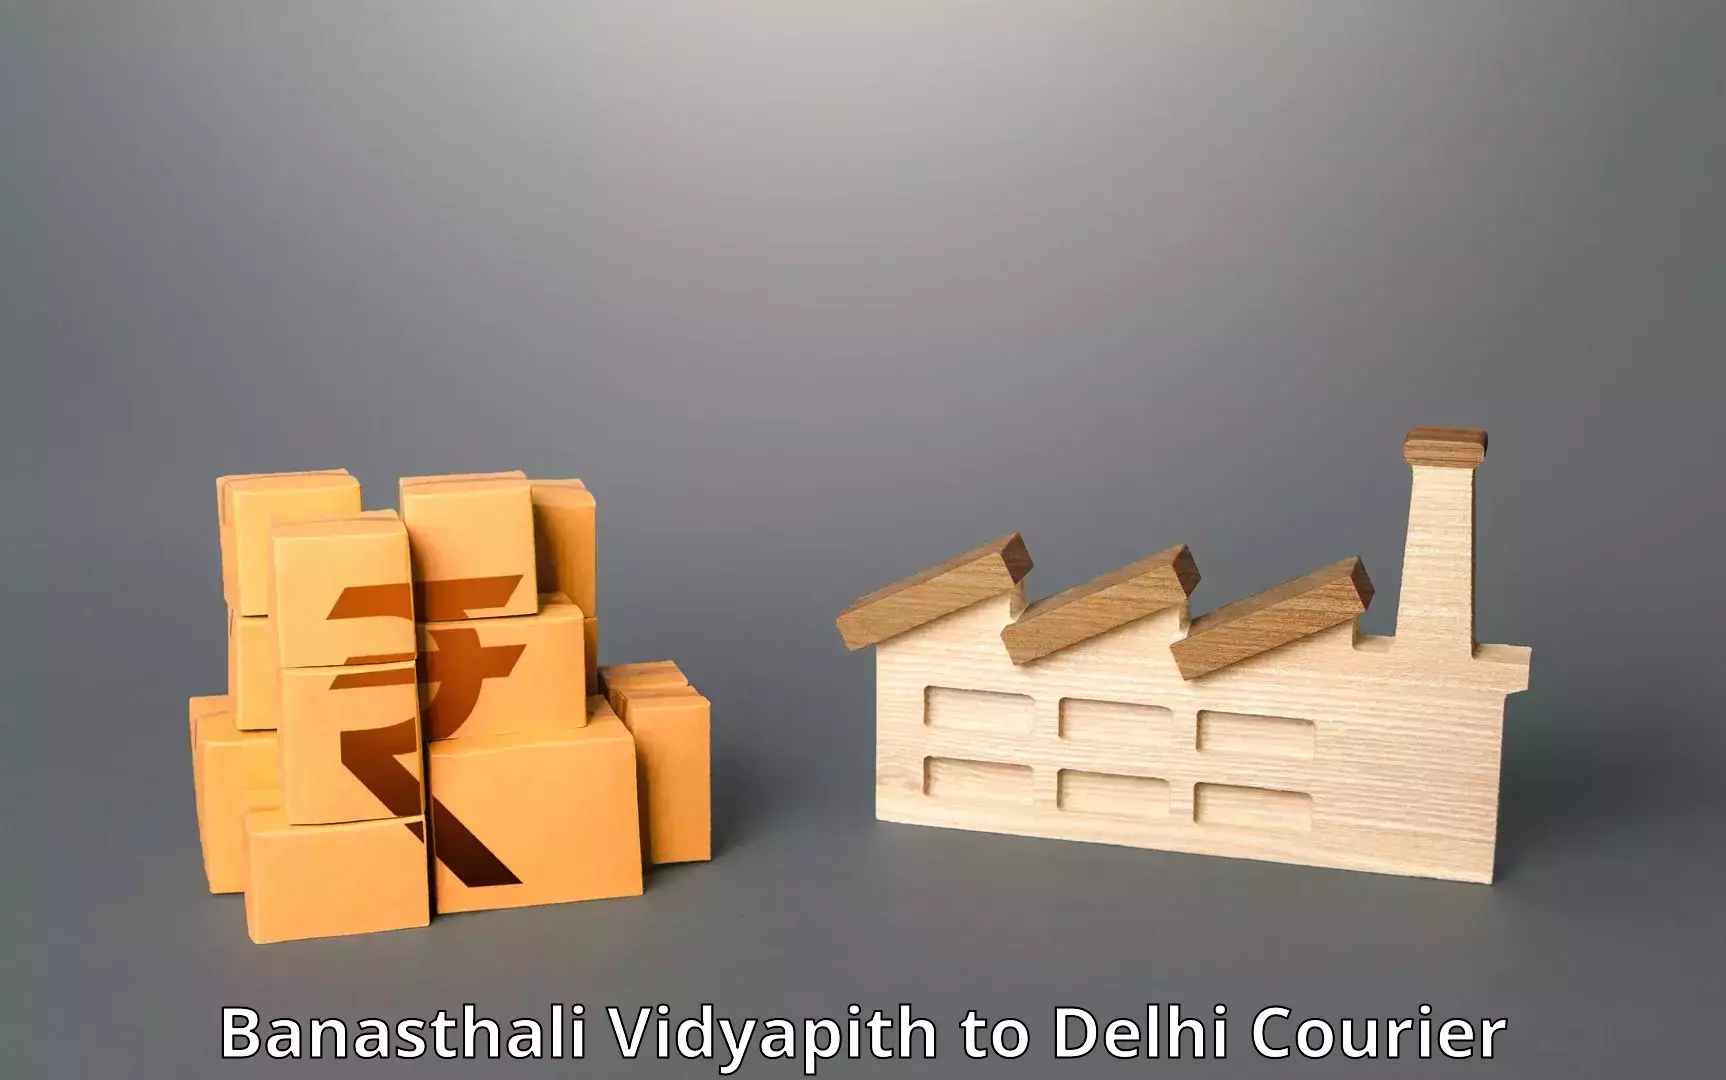 Doorstep delivery service Banasthali Vidyapith to University of Delhi